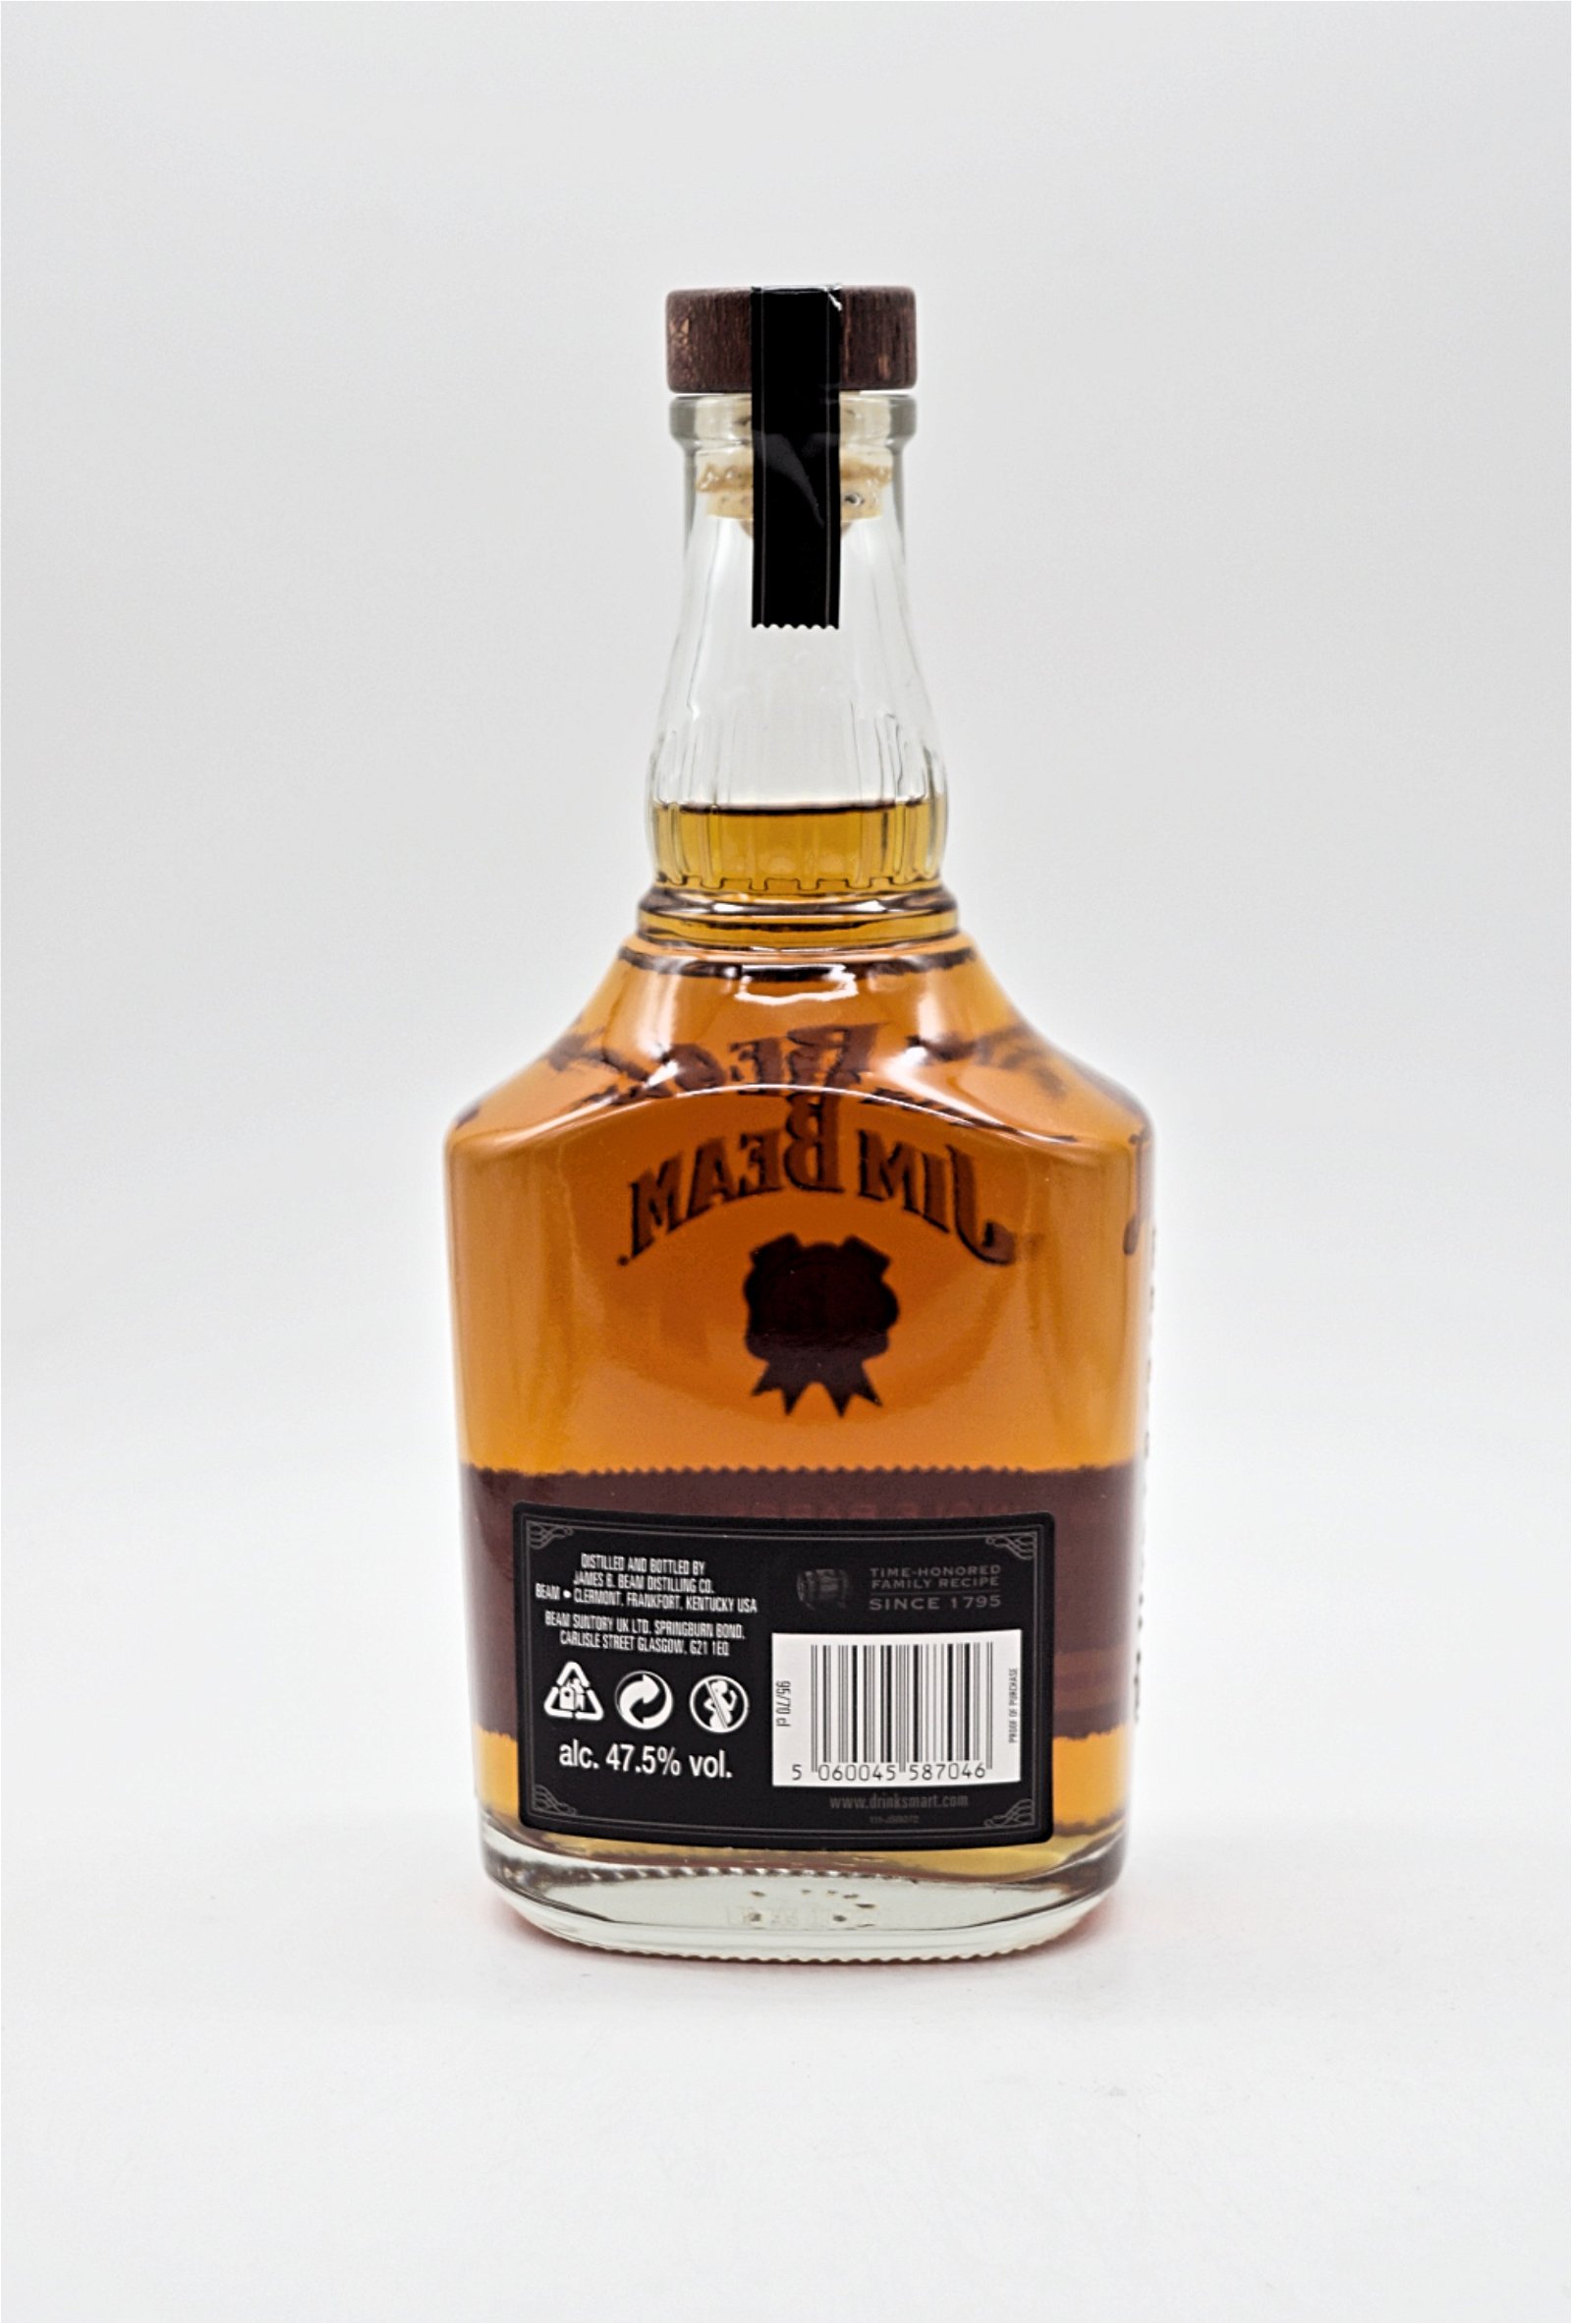 Jim Beam Single Barrel Kentucky Straight Bourbon Whiskey Selected Batch 95 Proof